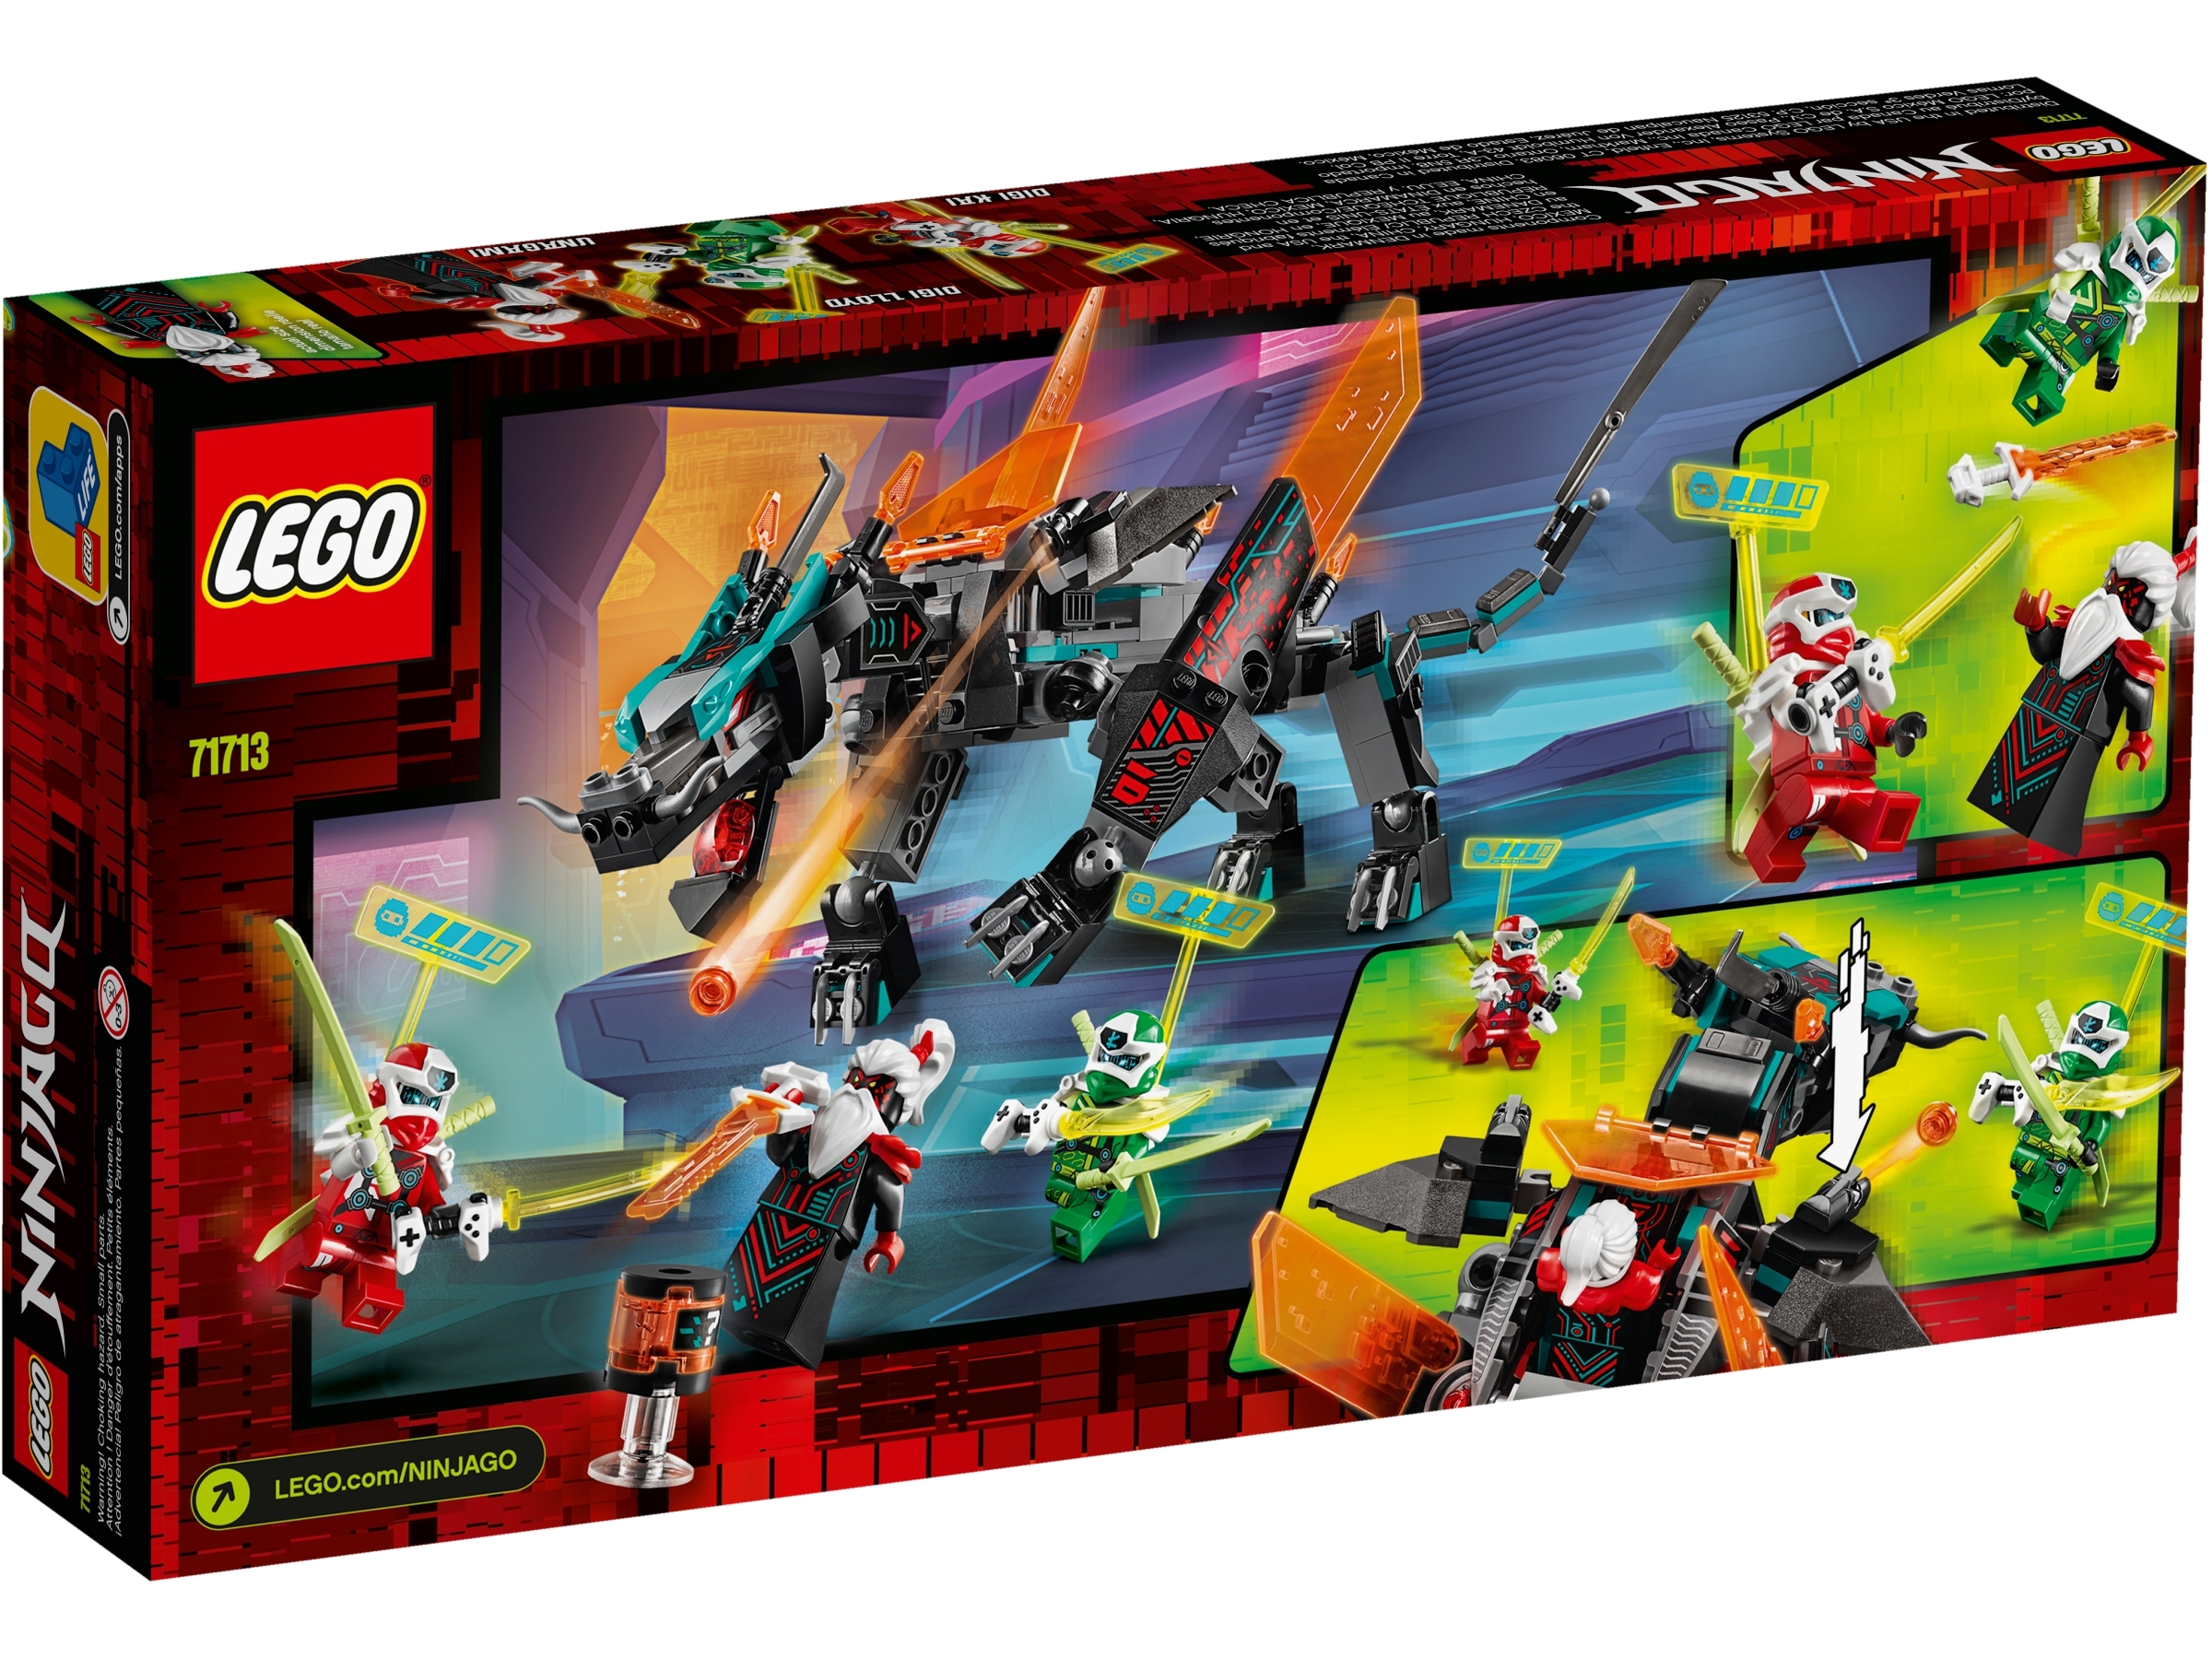 Lego 71713 Ninjago Empire Dragon Schwarzer Tempeldrache 